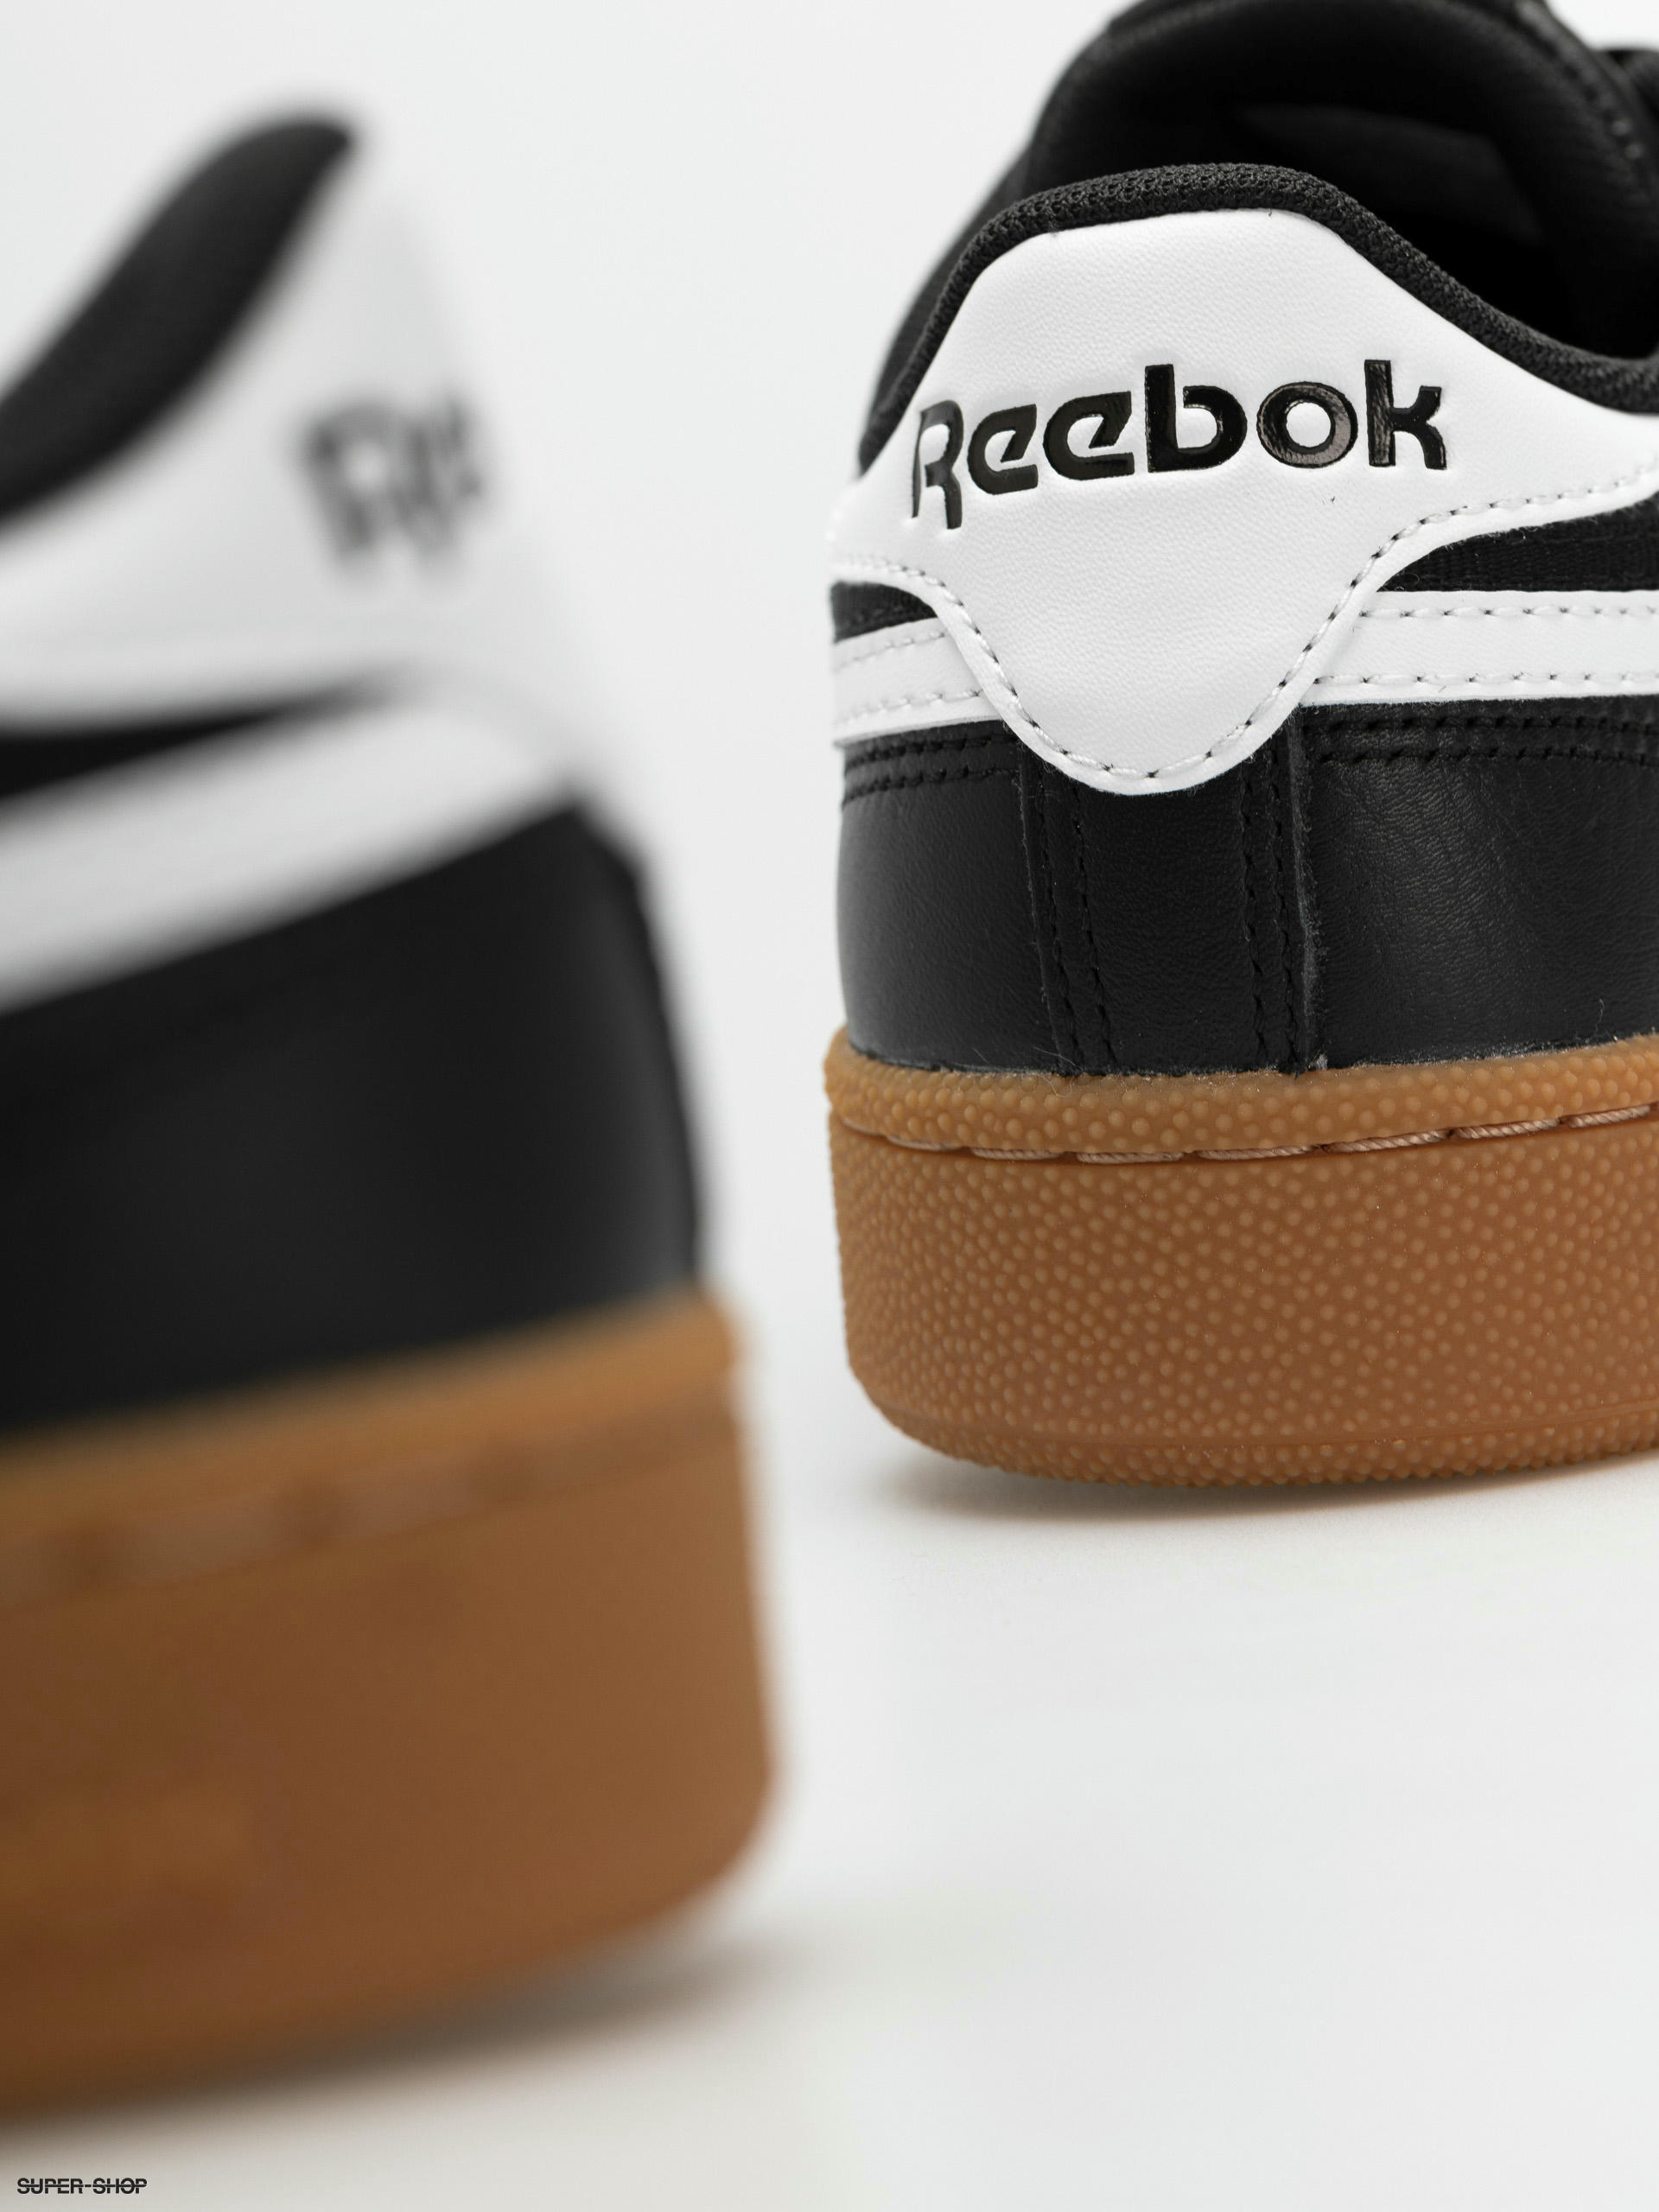 REEBOK Club C Revenge white / black - white blue leather sneakers